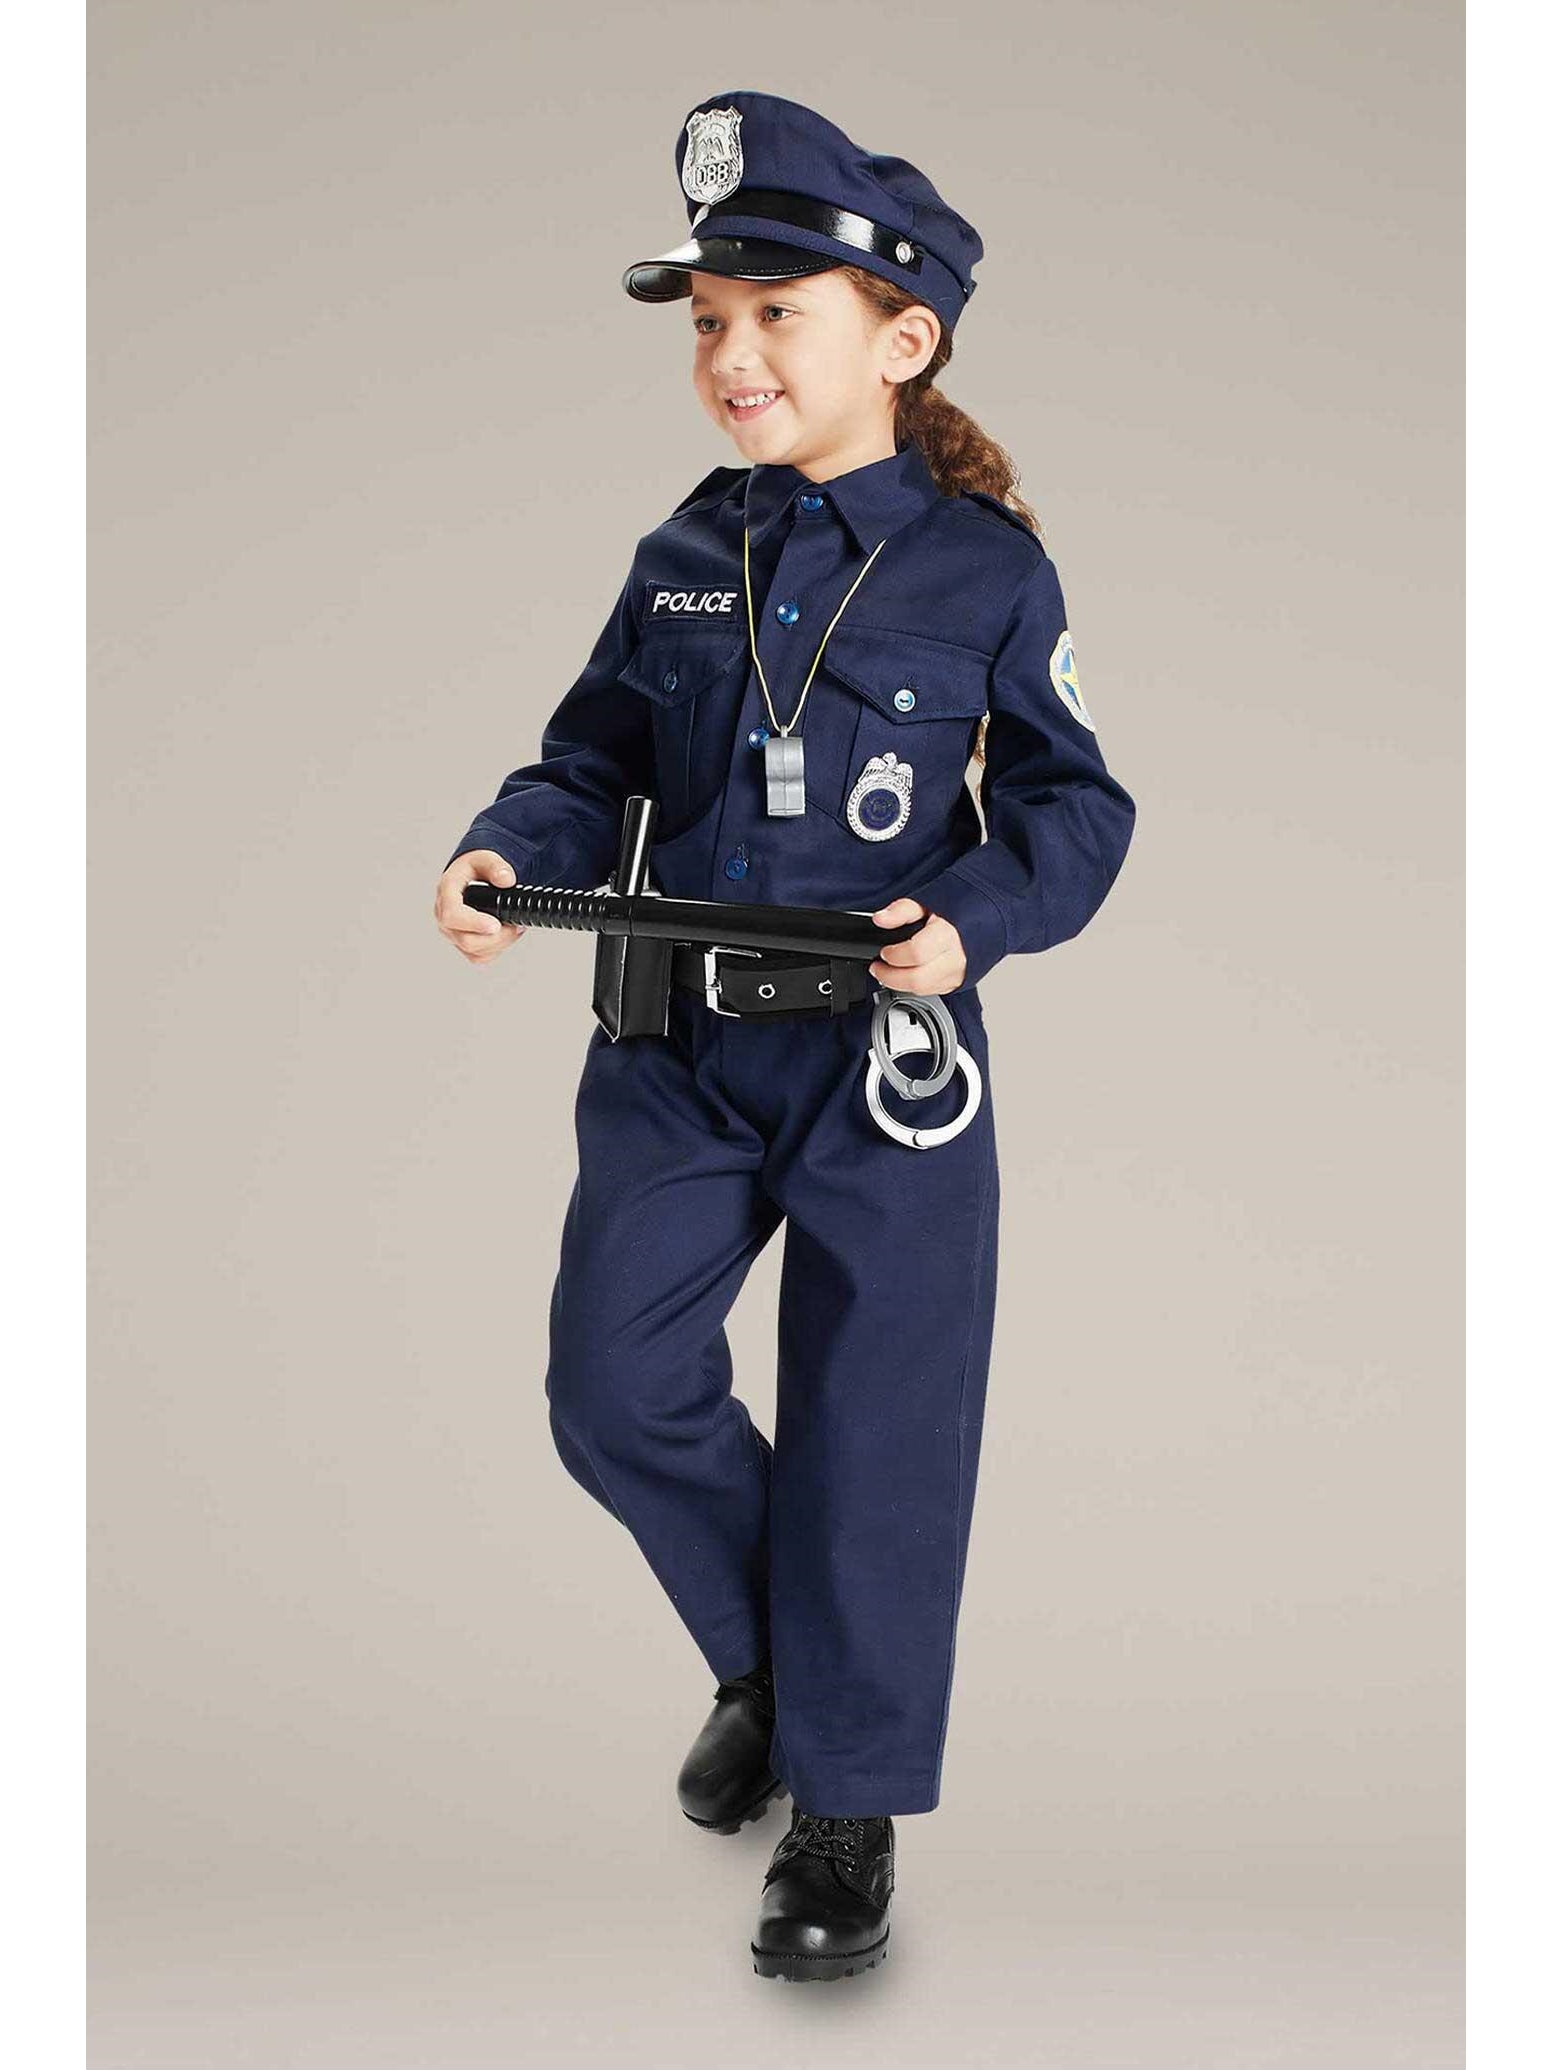 Jr. Police Officer Costume for Kids – Chasing Fireflies